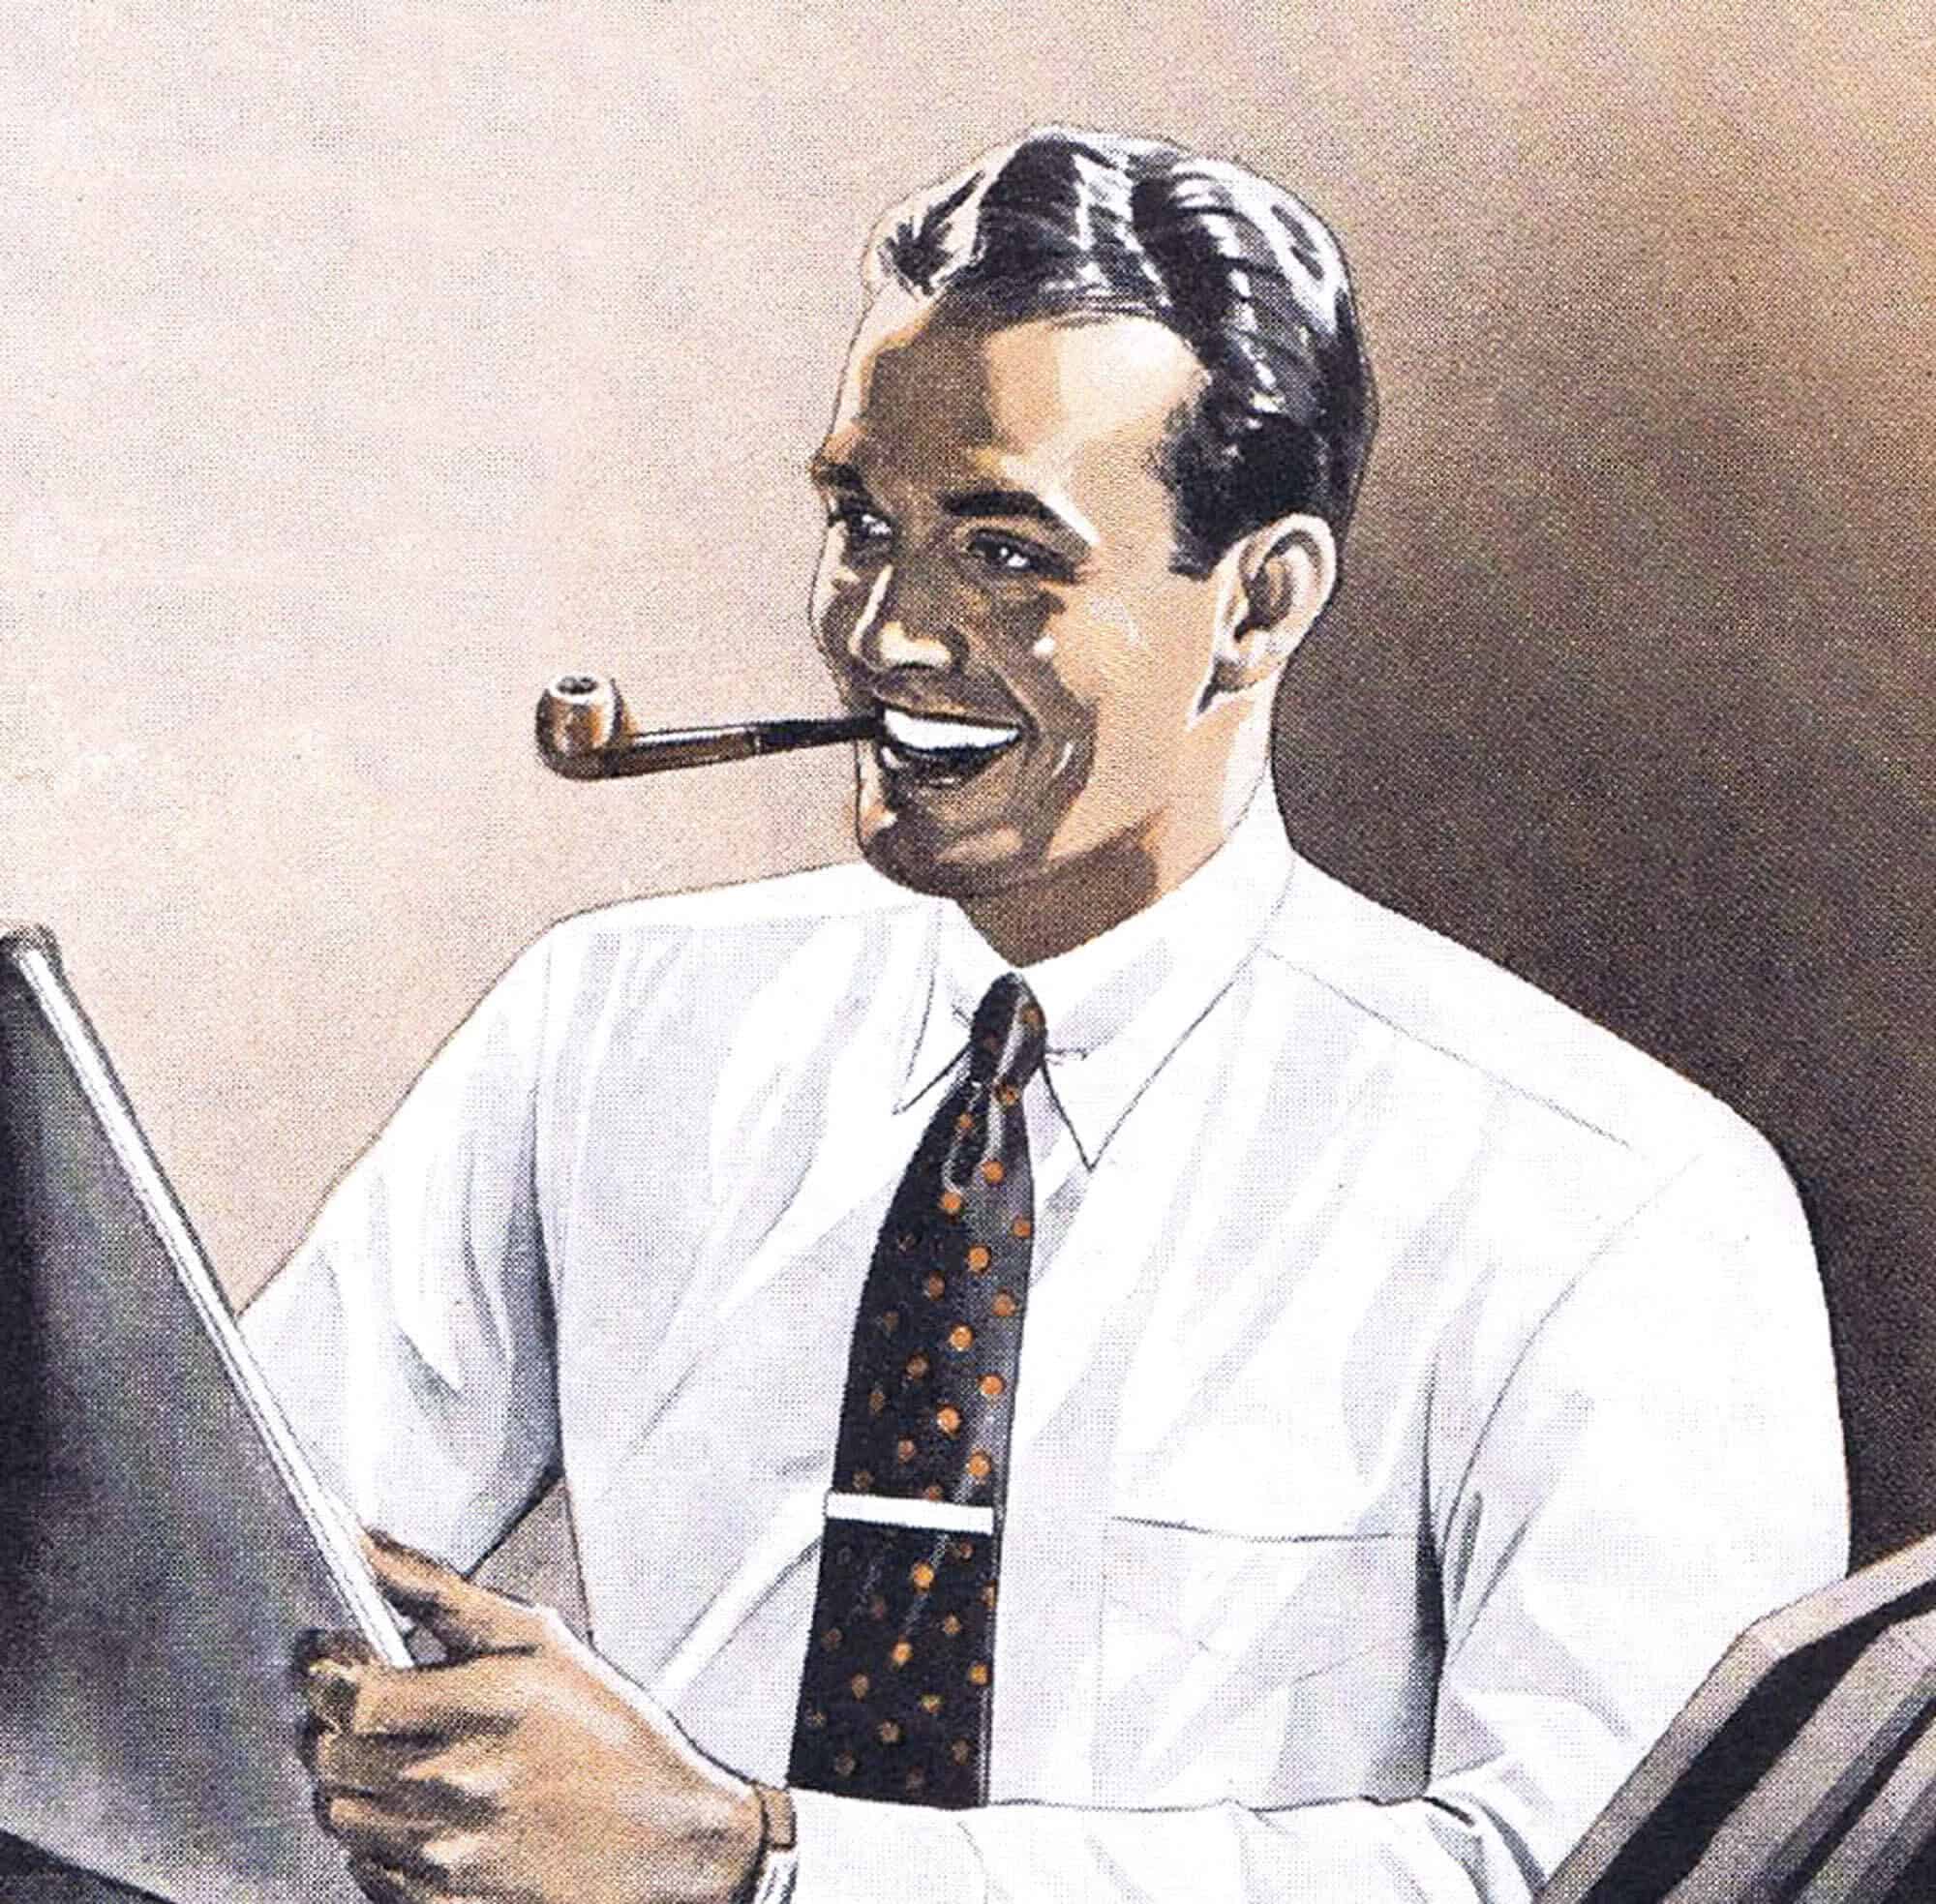 Nostalgic-images-of-the-suburban-pipe-smoker